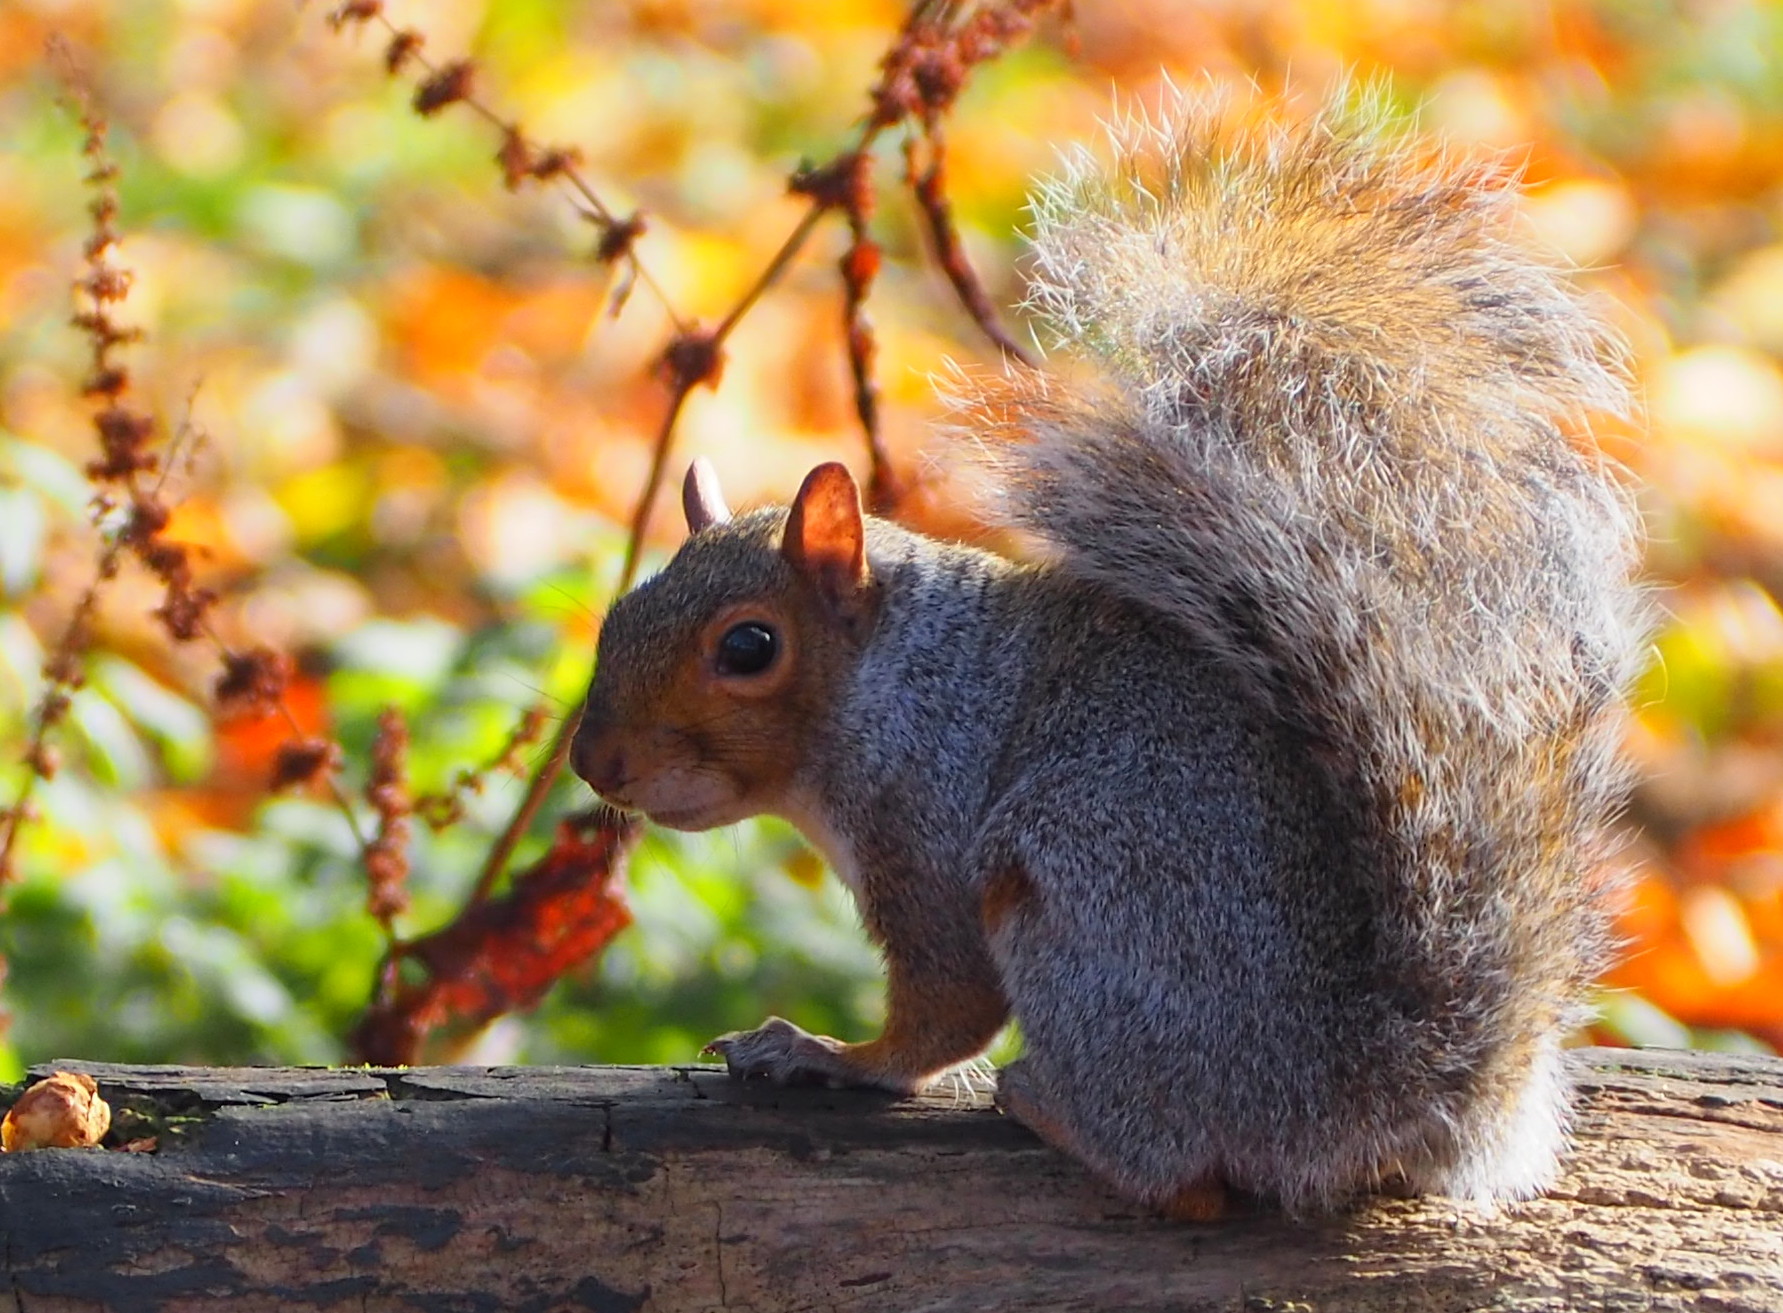 Squirrel on a branch in autumn